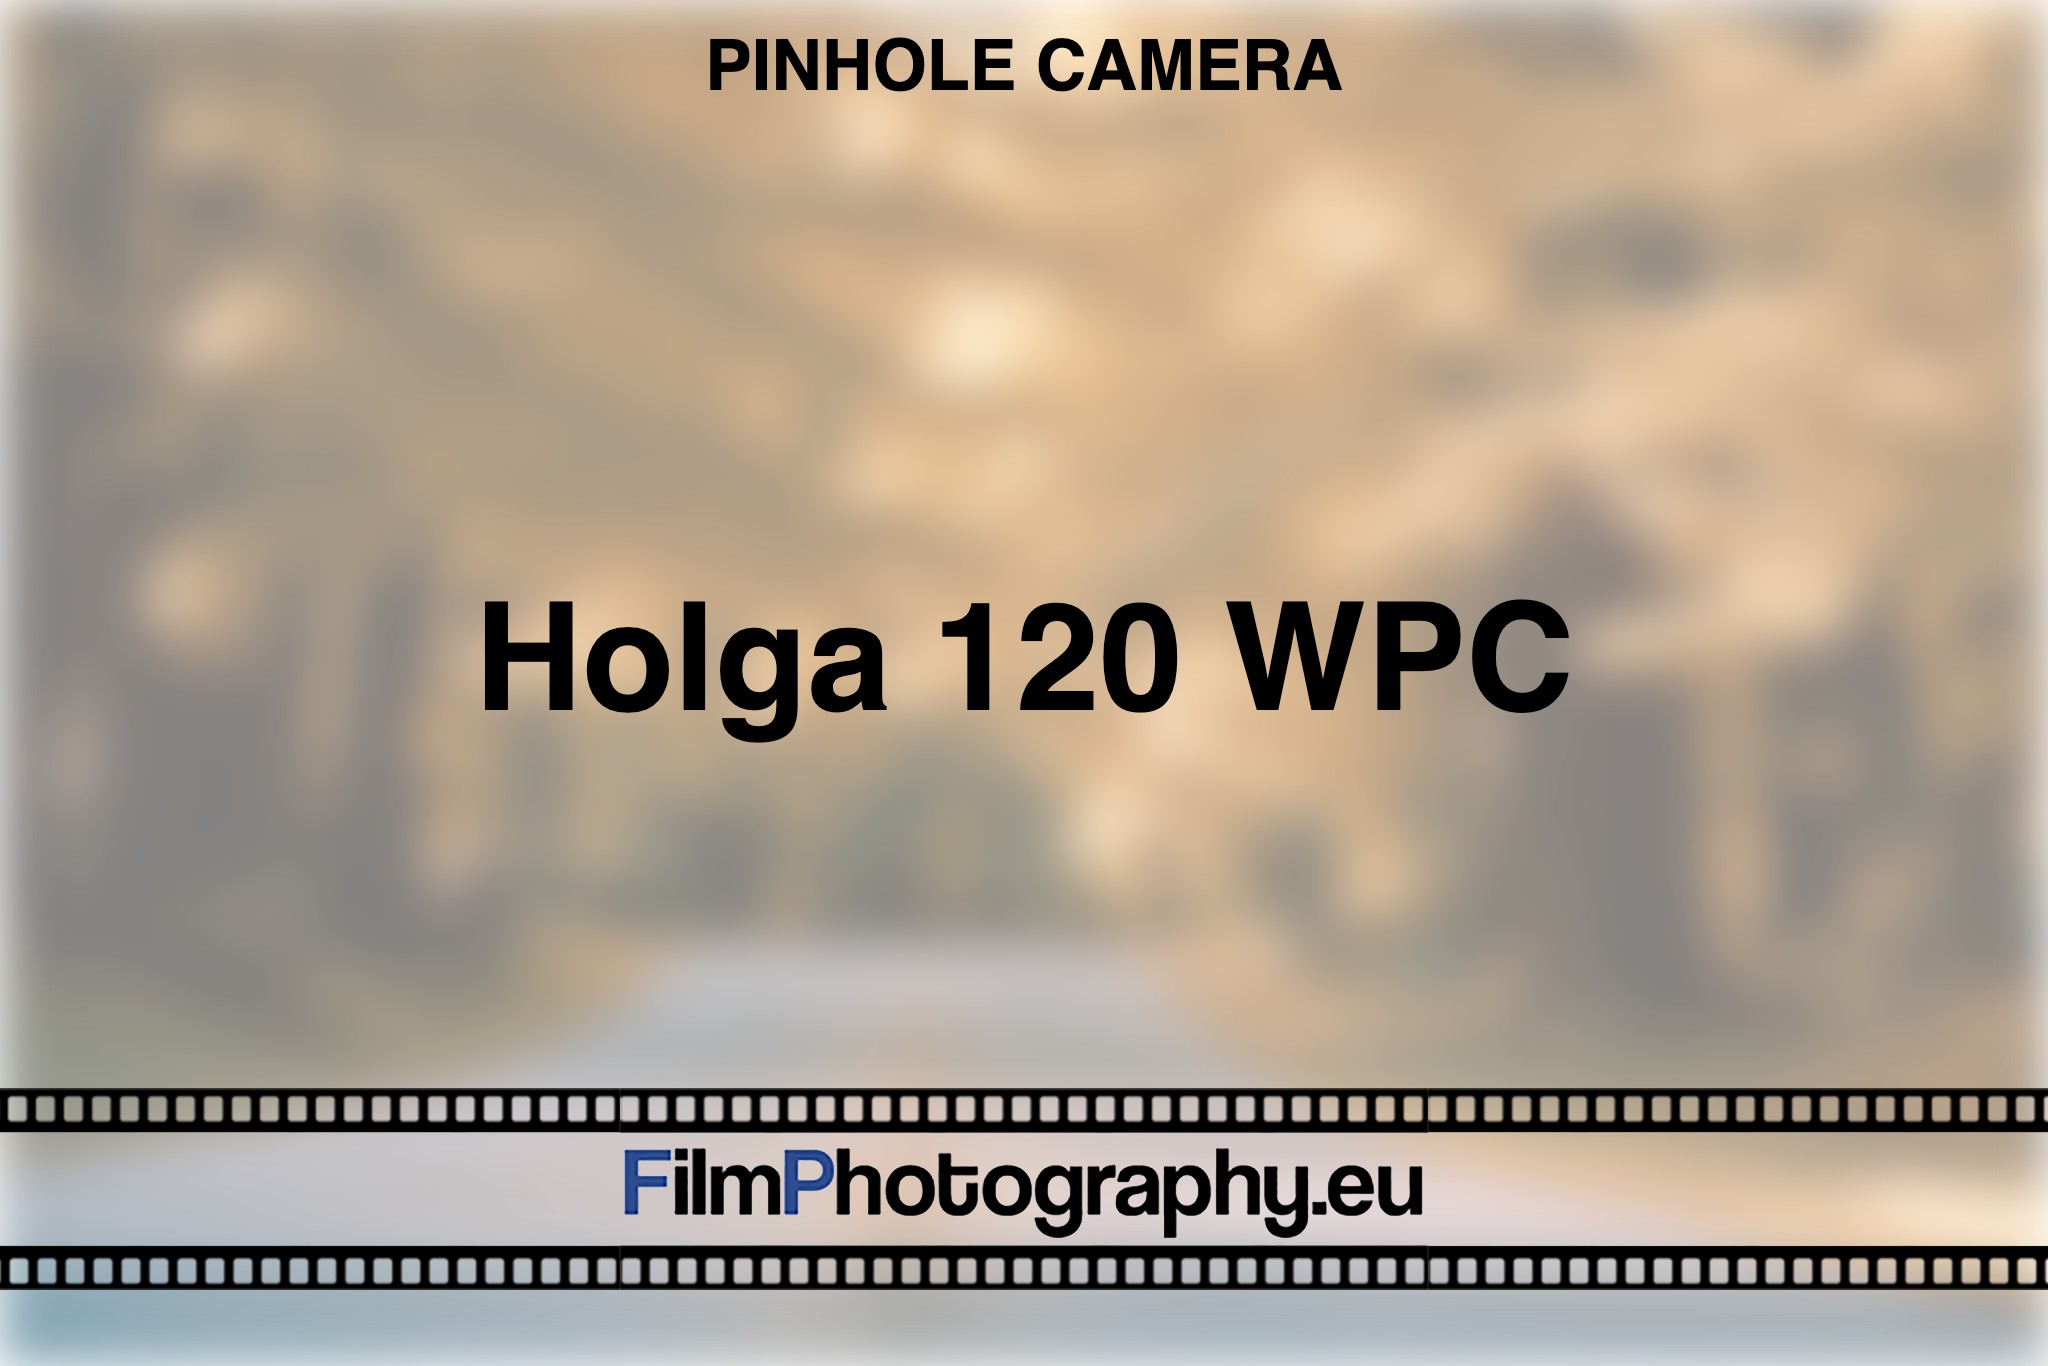 holga-120-wpc-pinhole-camera-bnv